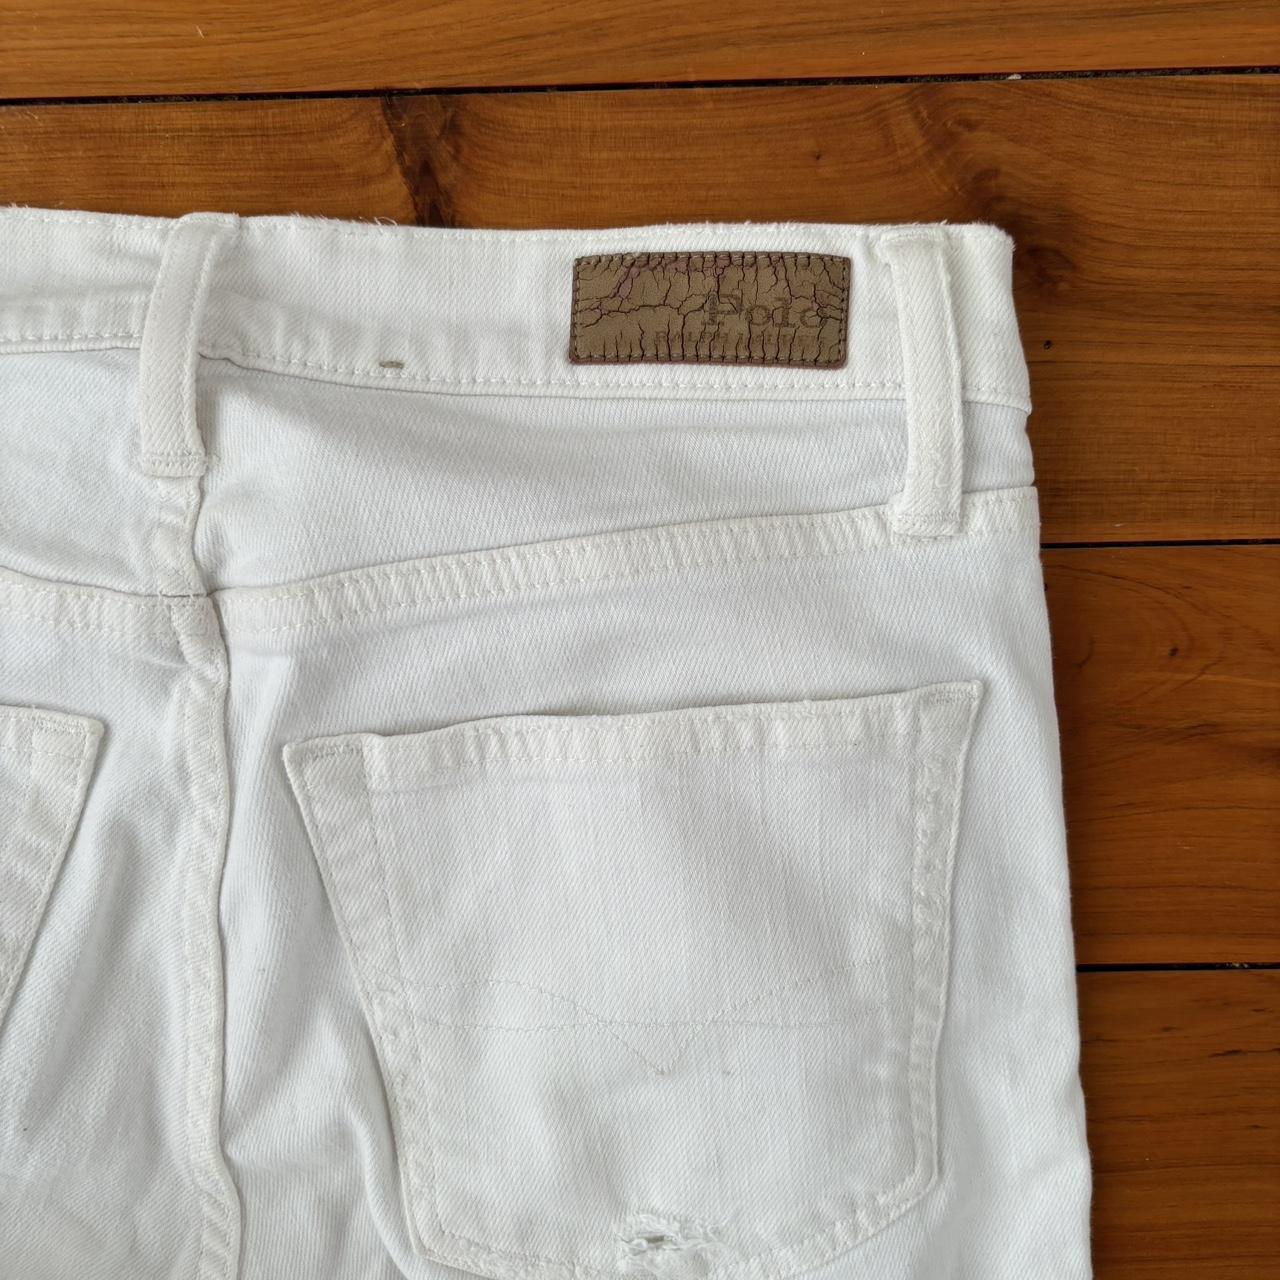 Vintage polo Ralph Lauren jeans. Cropped slight... - Depop